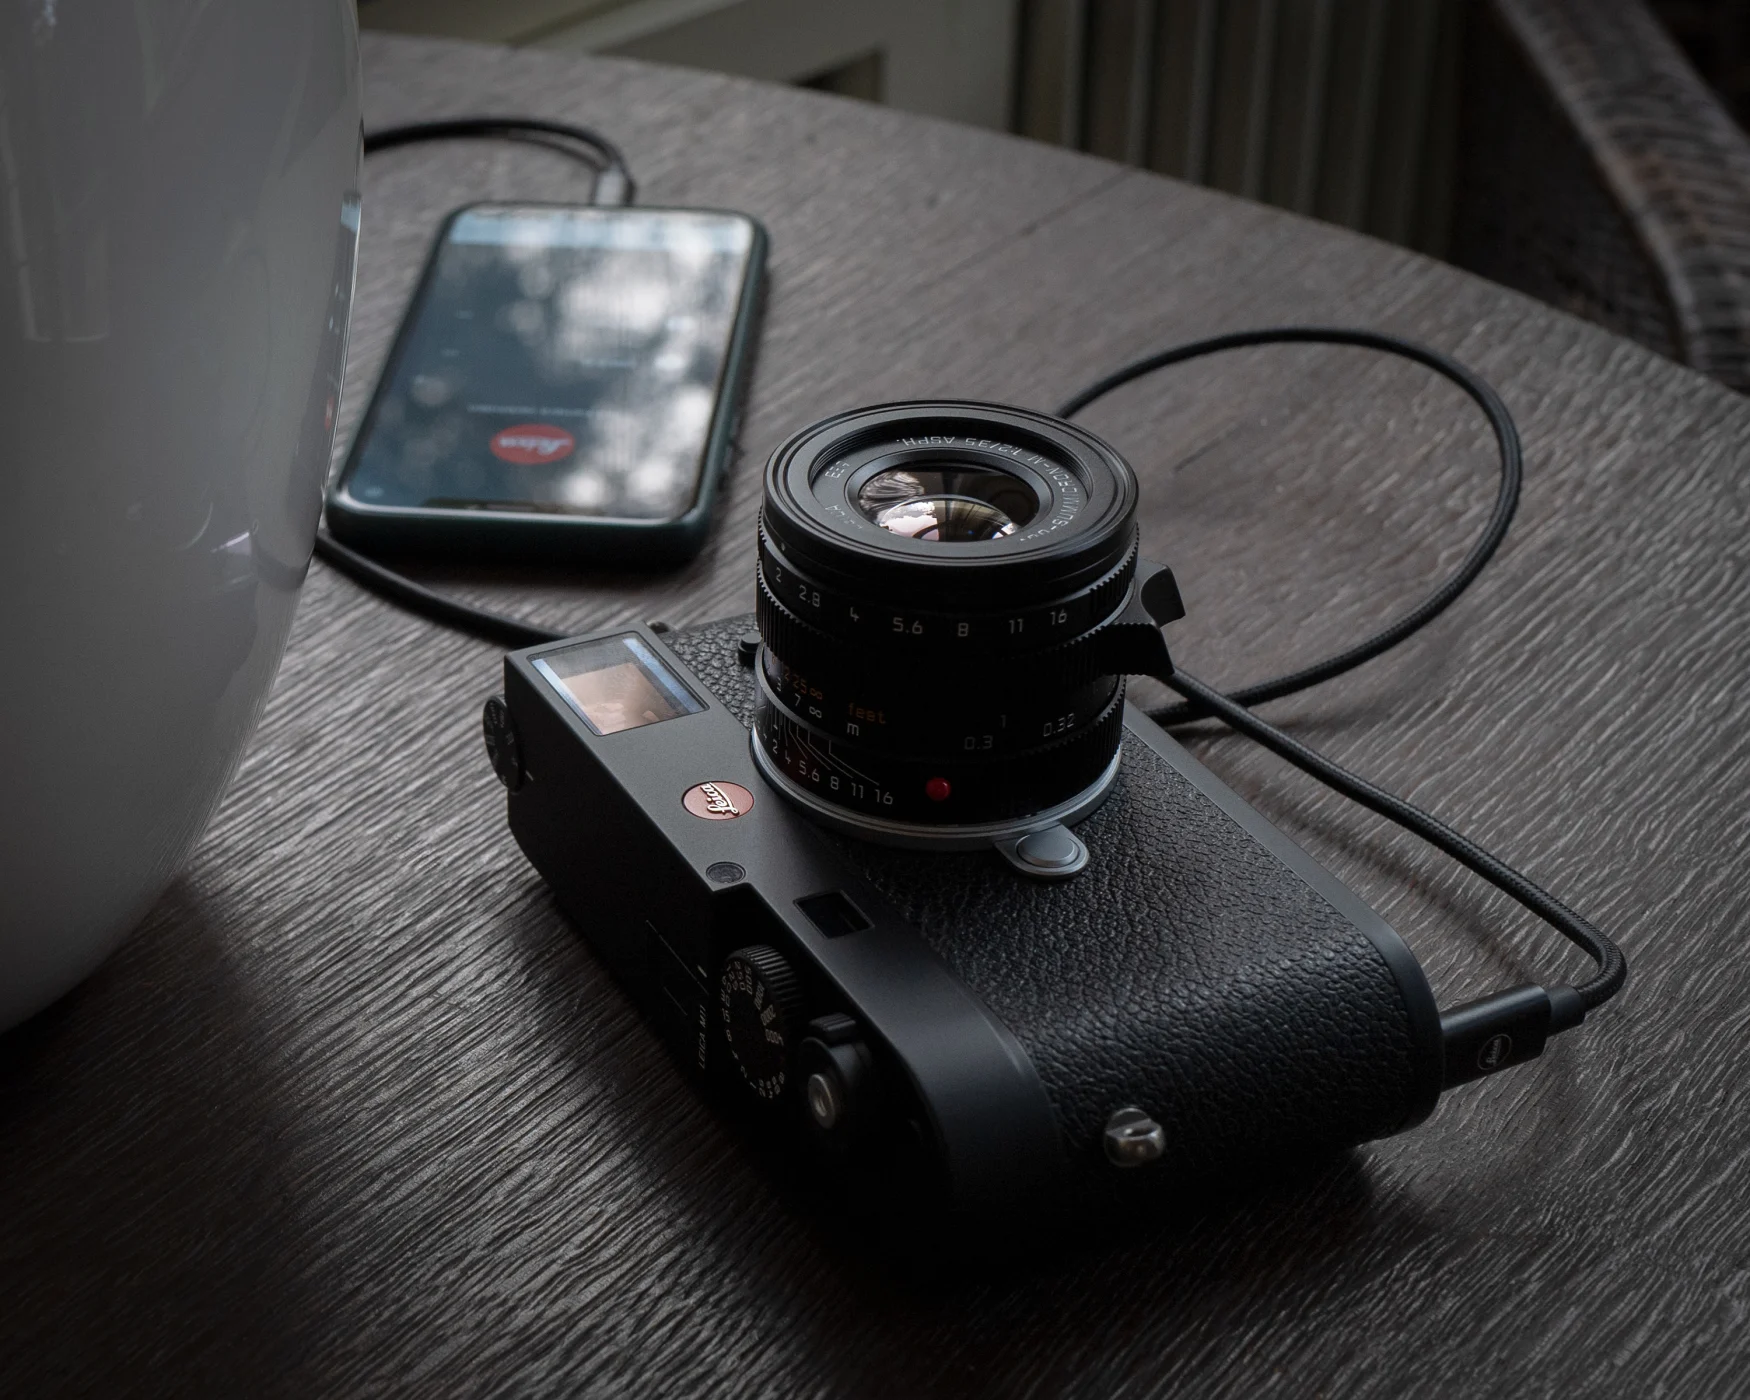 Leica M11 transferring photos to a smartphone.